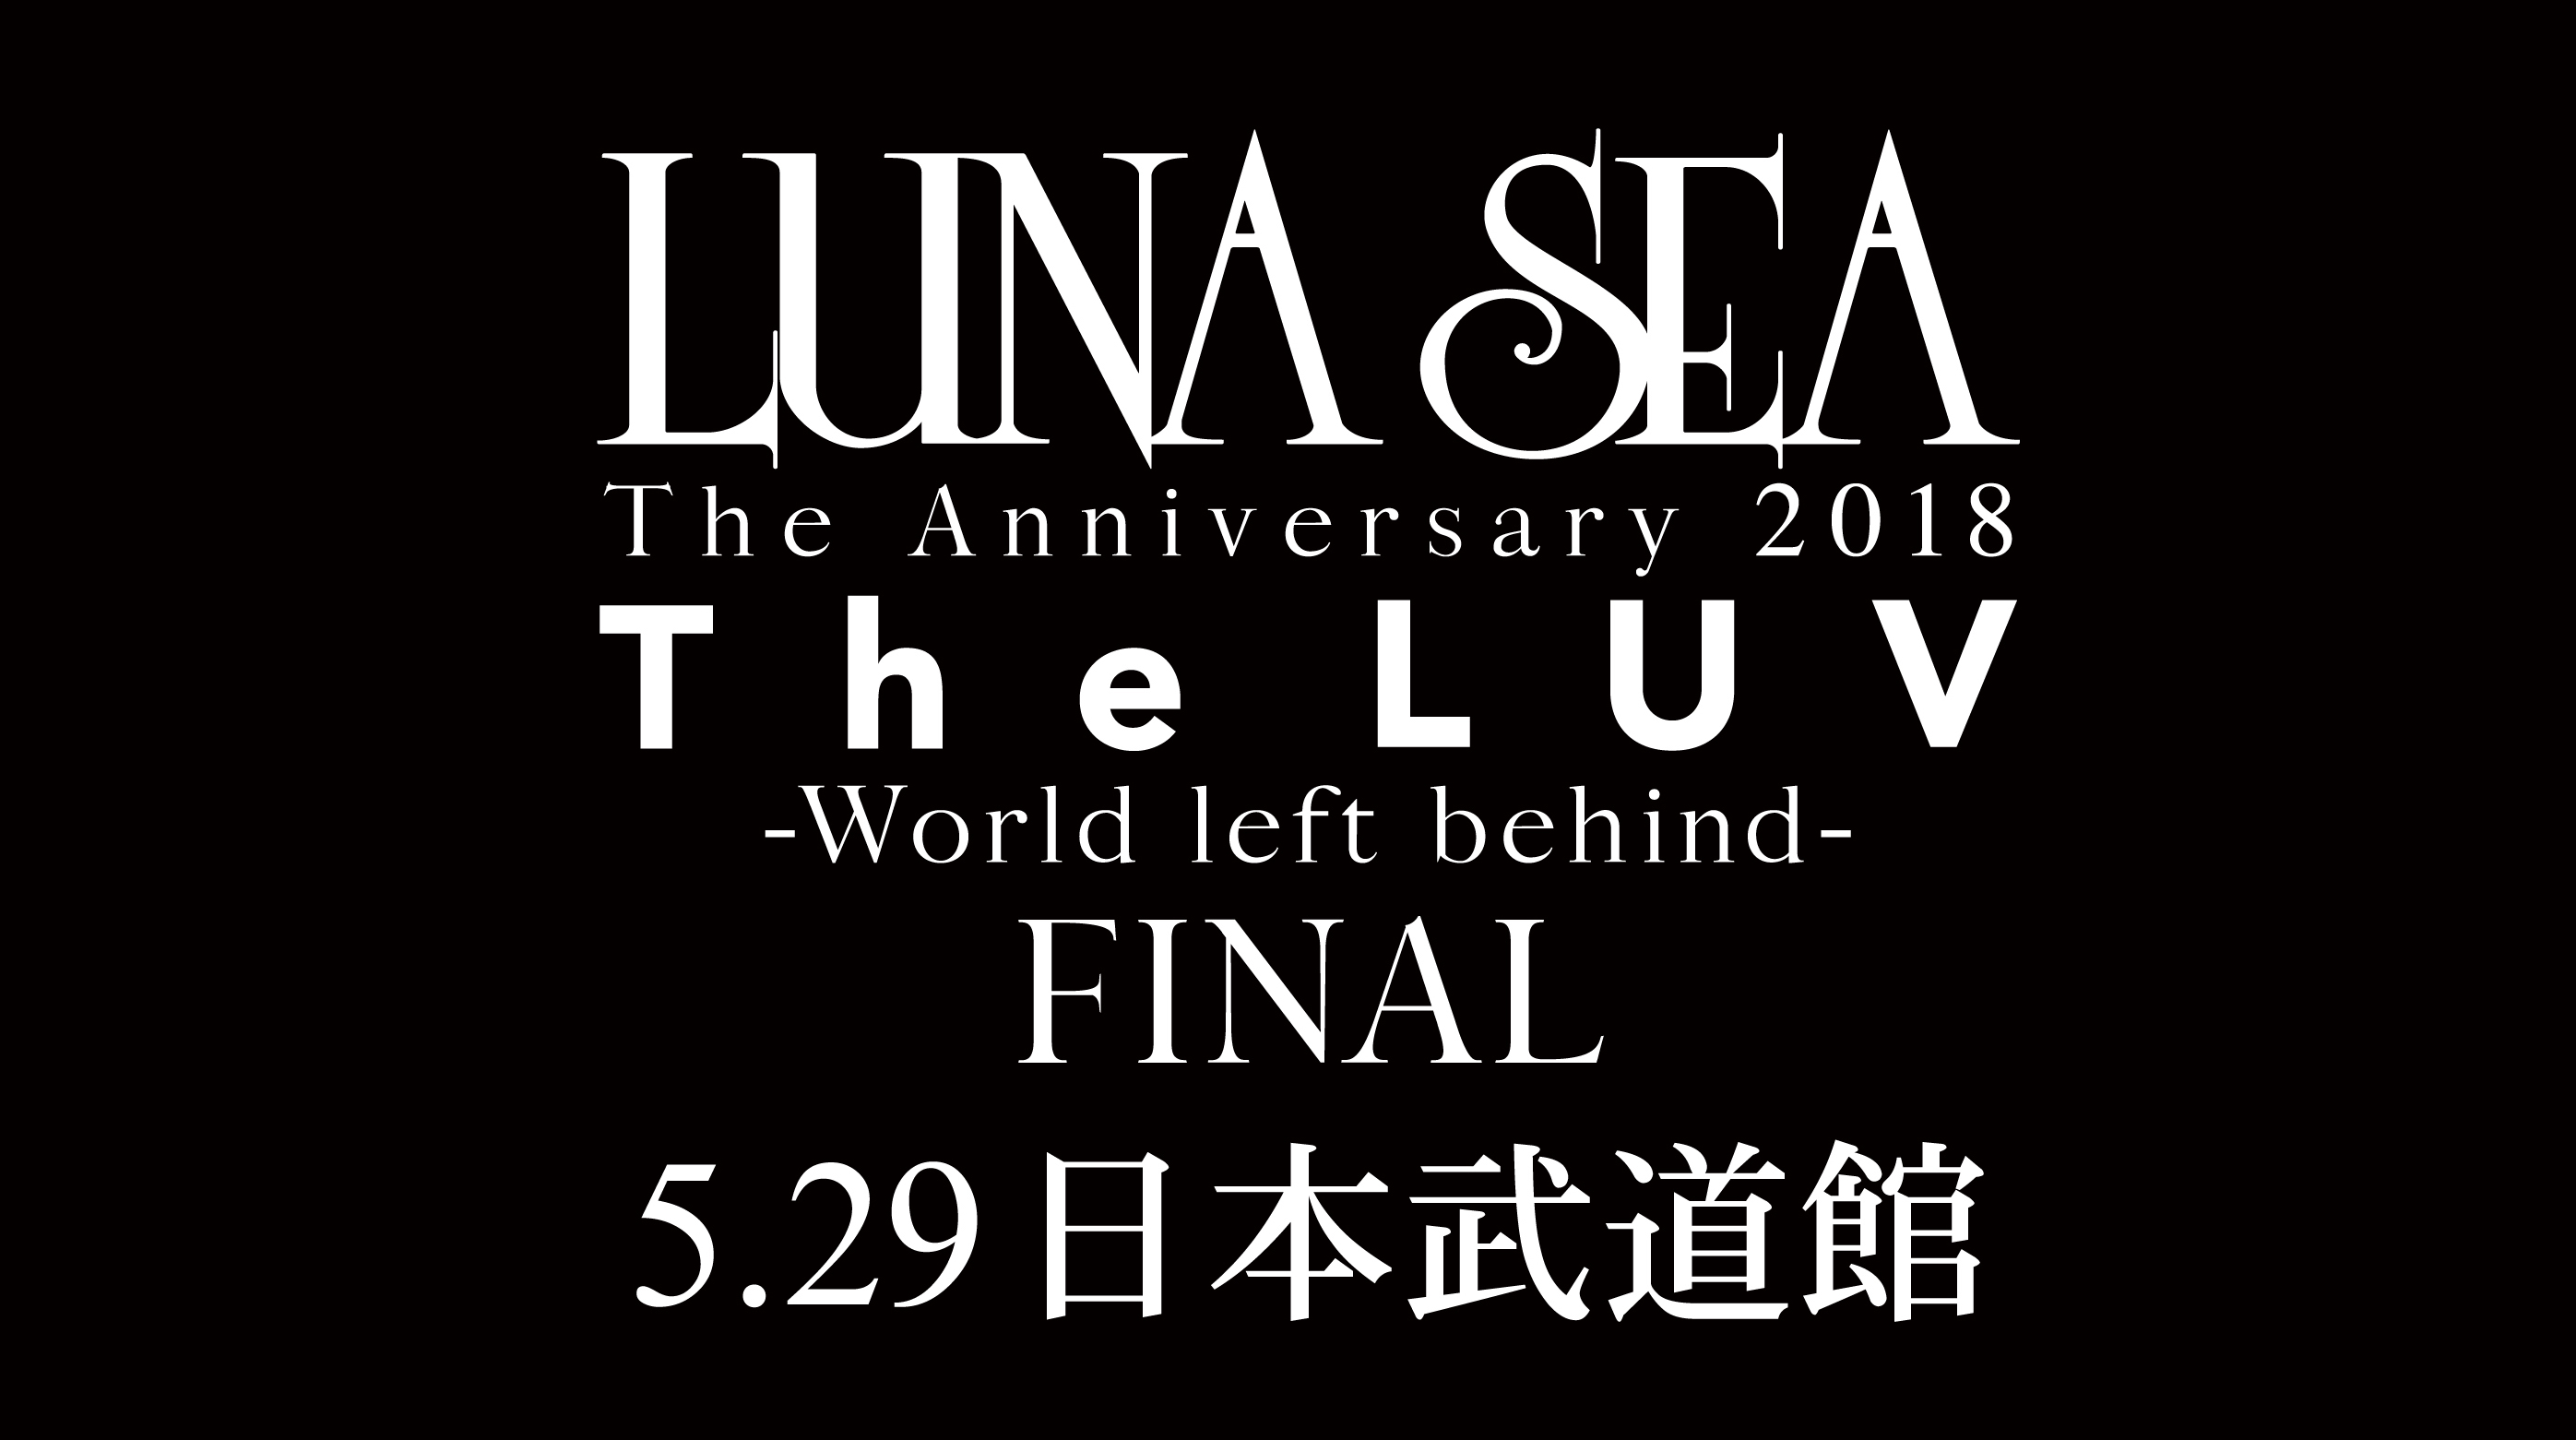 LUNA SEA 2018 The LUV World left behind- | www.mumstheword.me